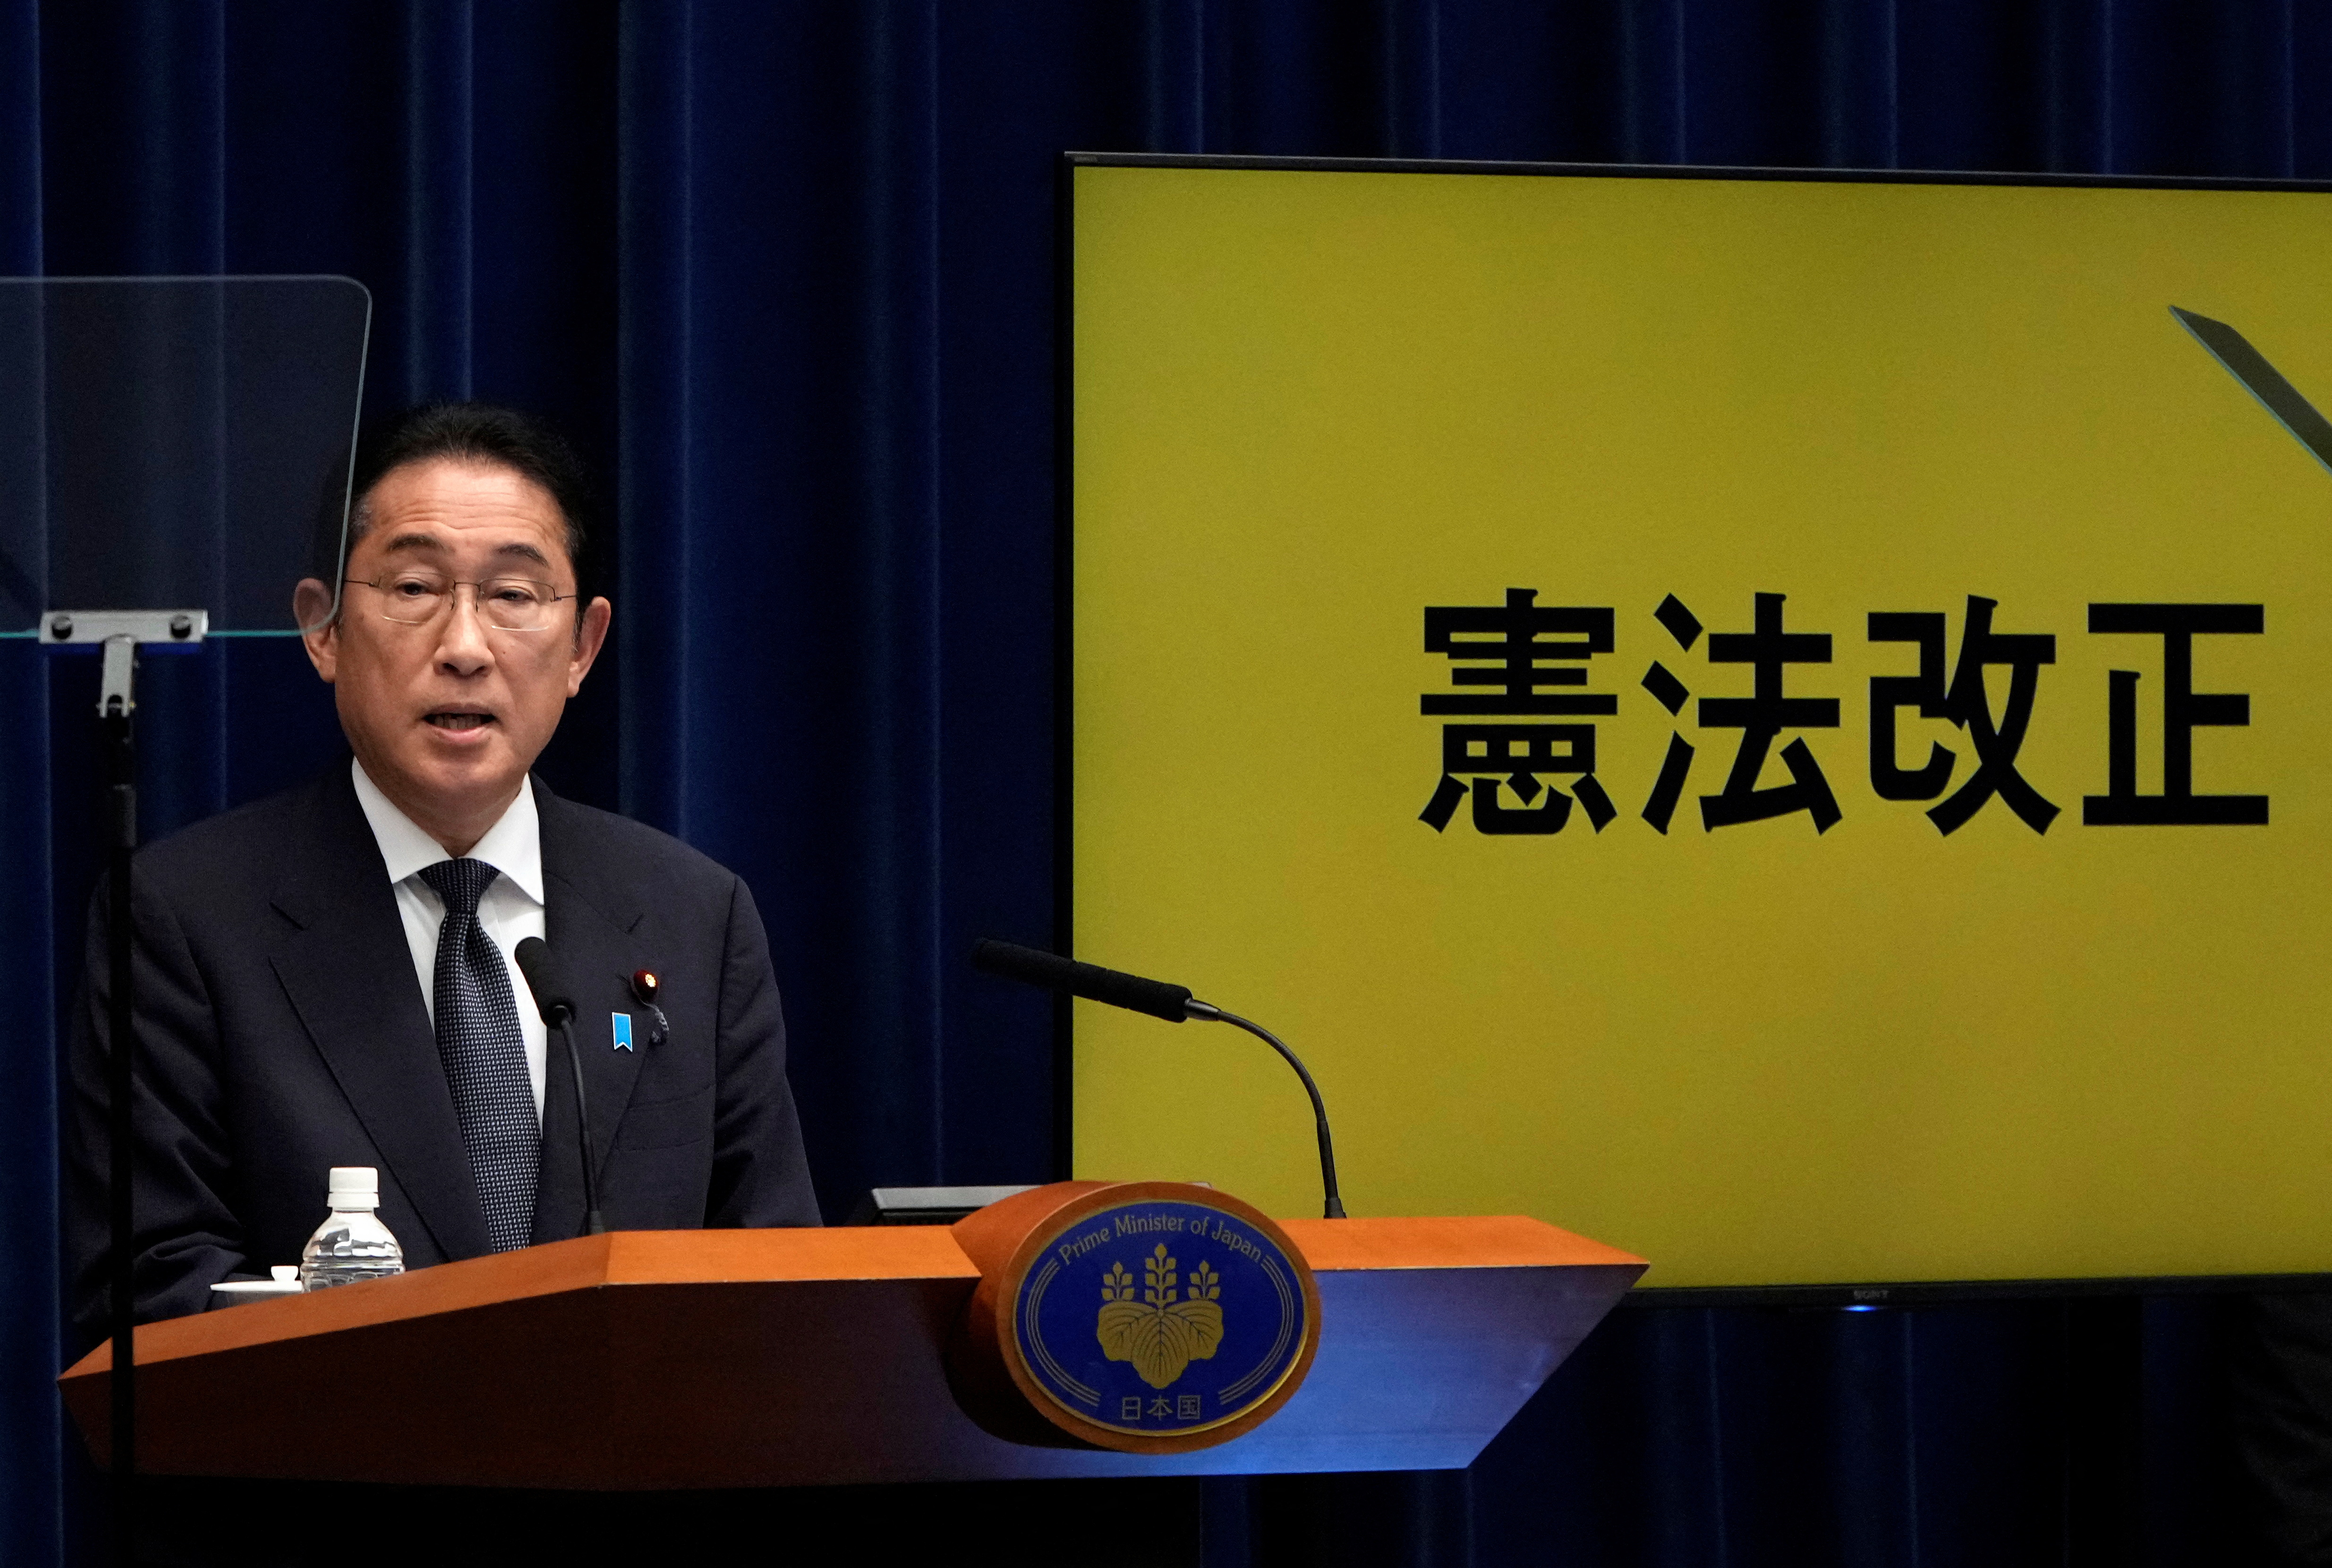 Press Conference by Japan's Prime Minister Fumio Kishida